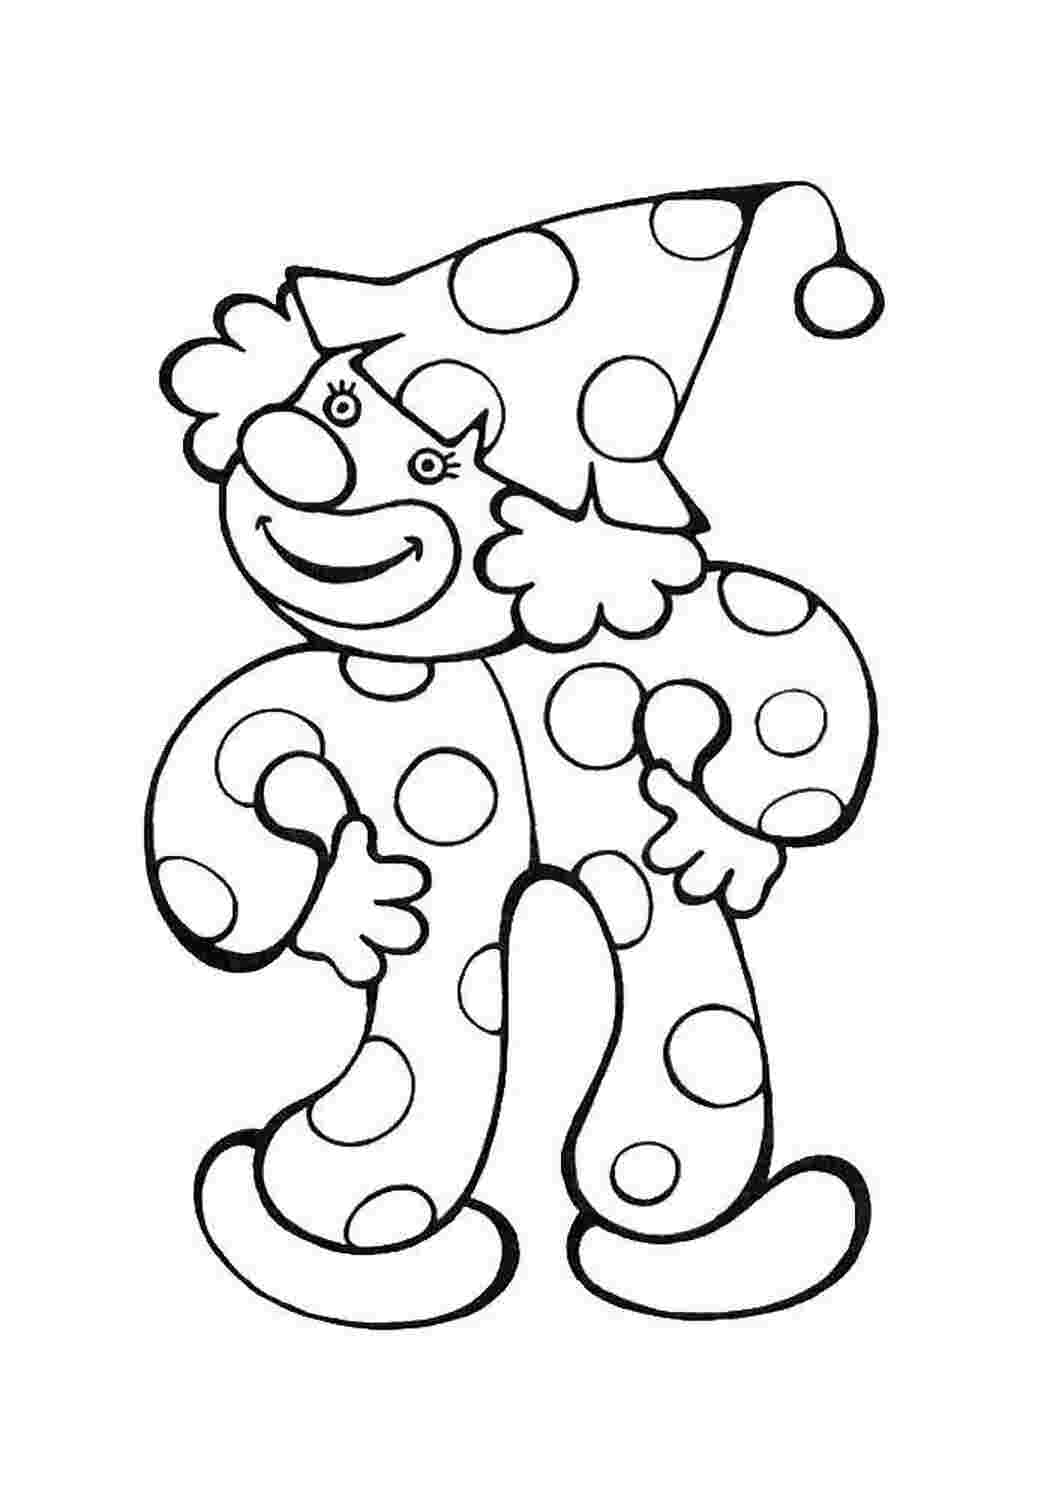 Клоун раскраска для детей 4 5. Клоун раскраска. Веселый клоун раскраска. Клоун раскраска для детей. Раскраска весёлый клоун для детей.